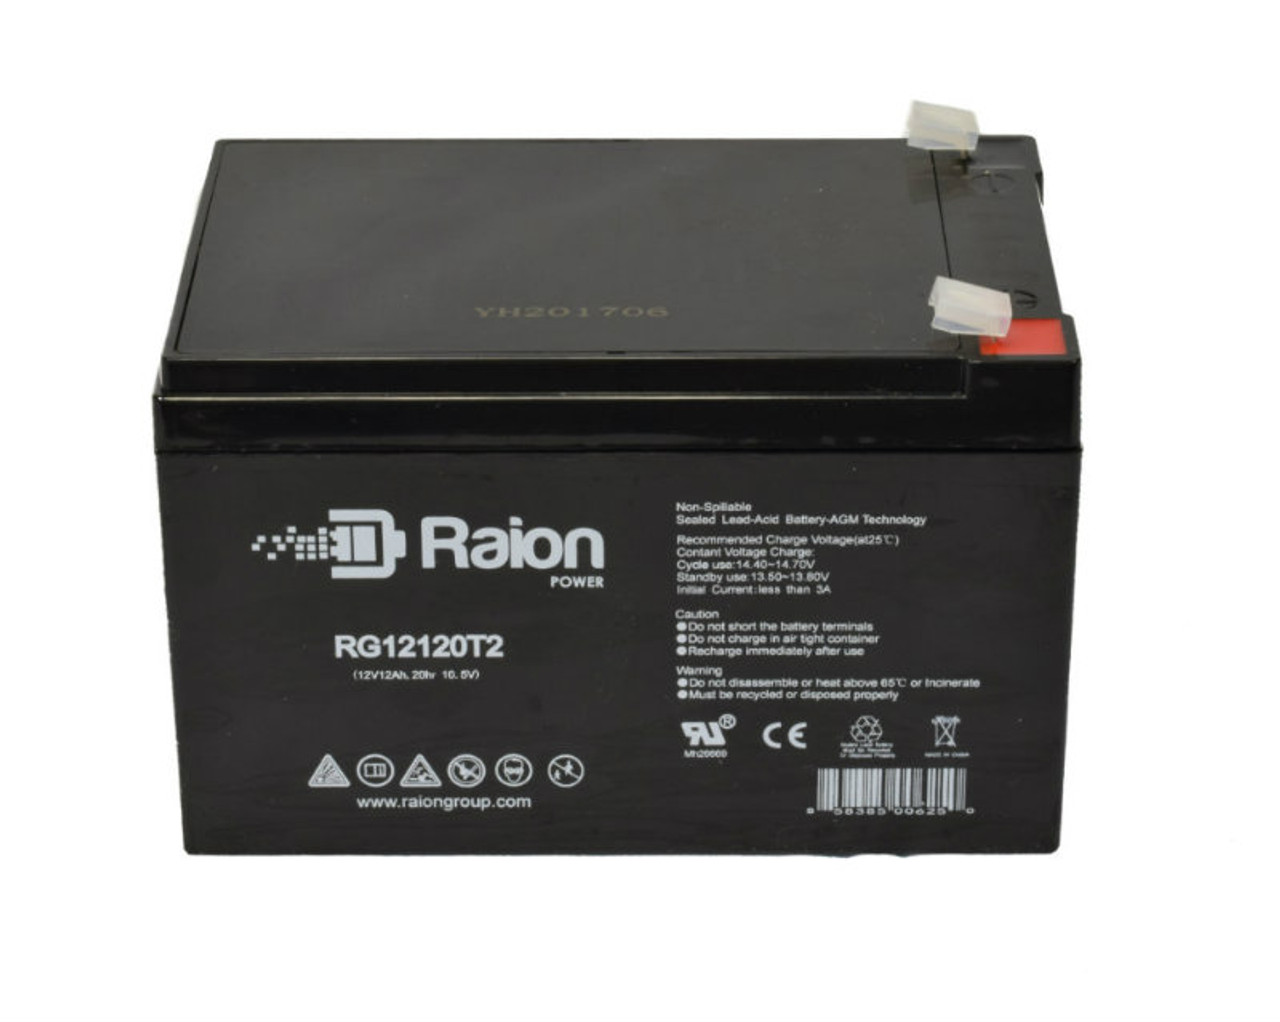 Raion Power RG12120T2 SLA Battery for Electric Mobility Wispa Wheelchairs